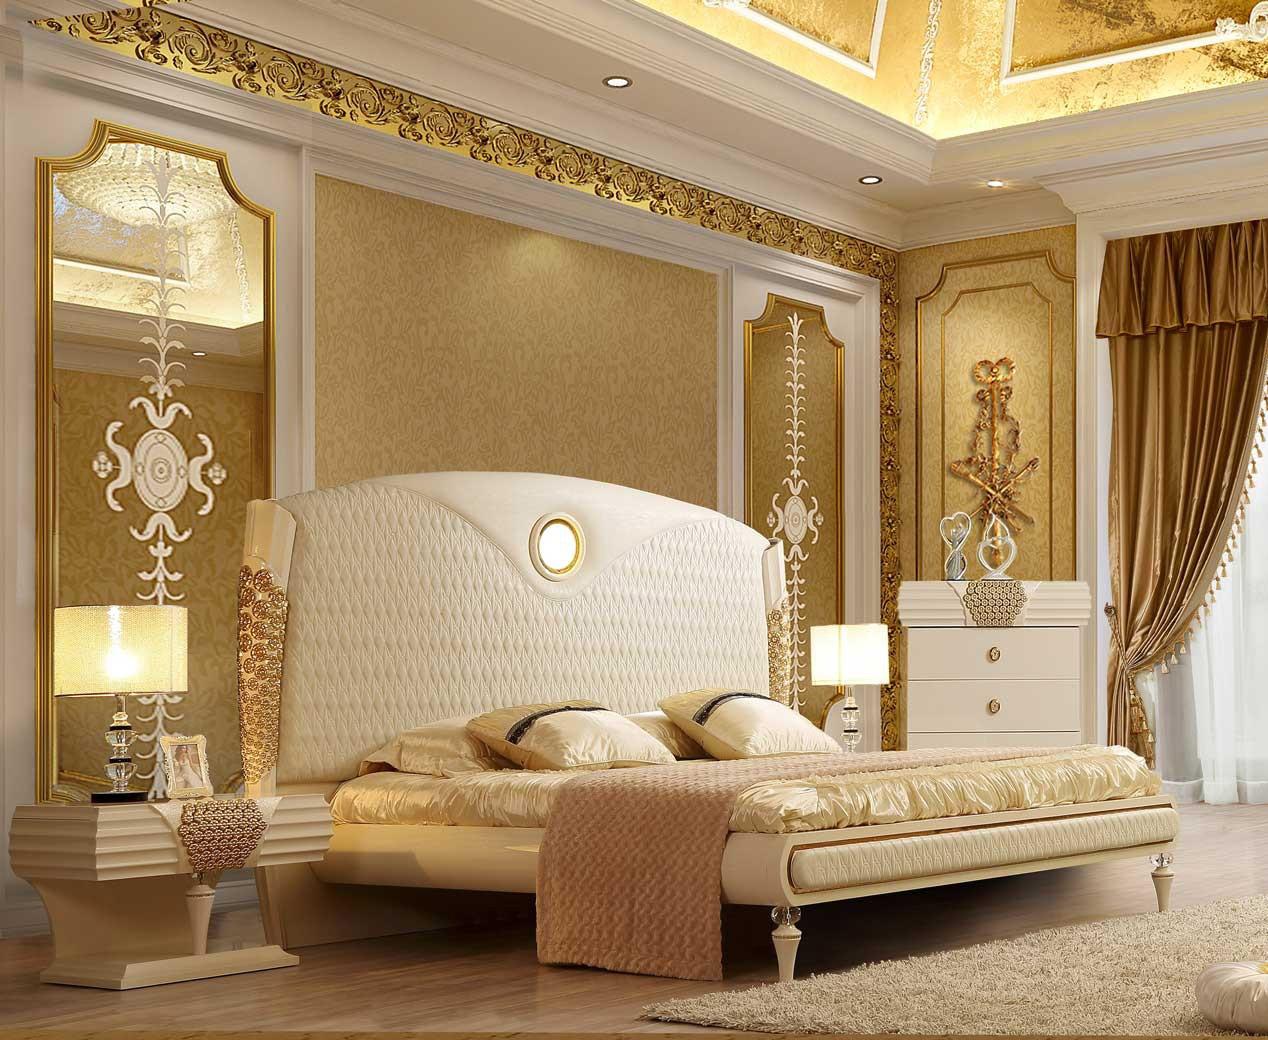 

    
Luxury King Bedroom Set 3 Pcs Cream Leather Contemporary Homey Design HD-901
